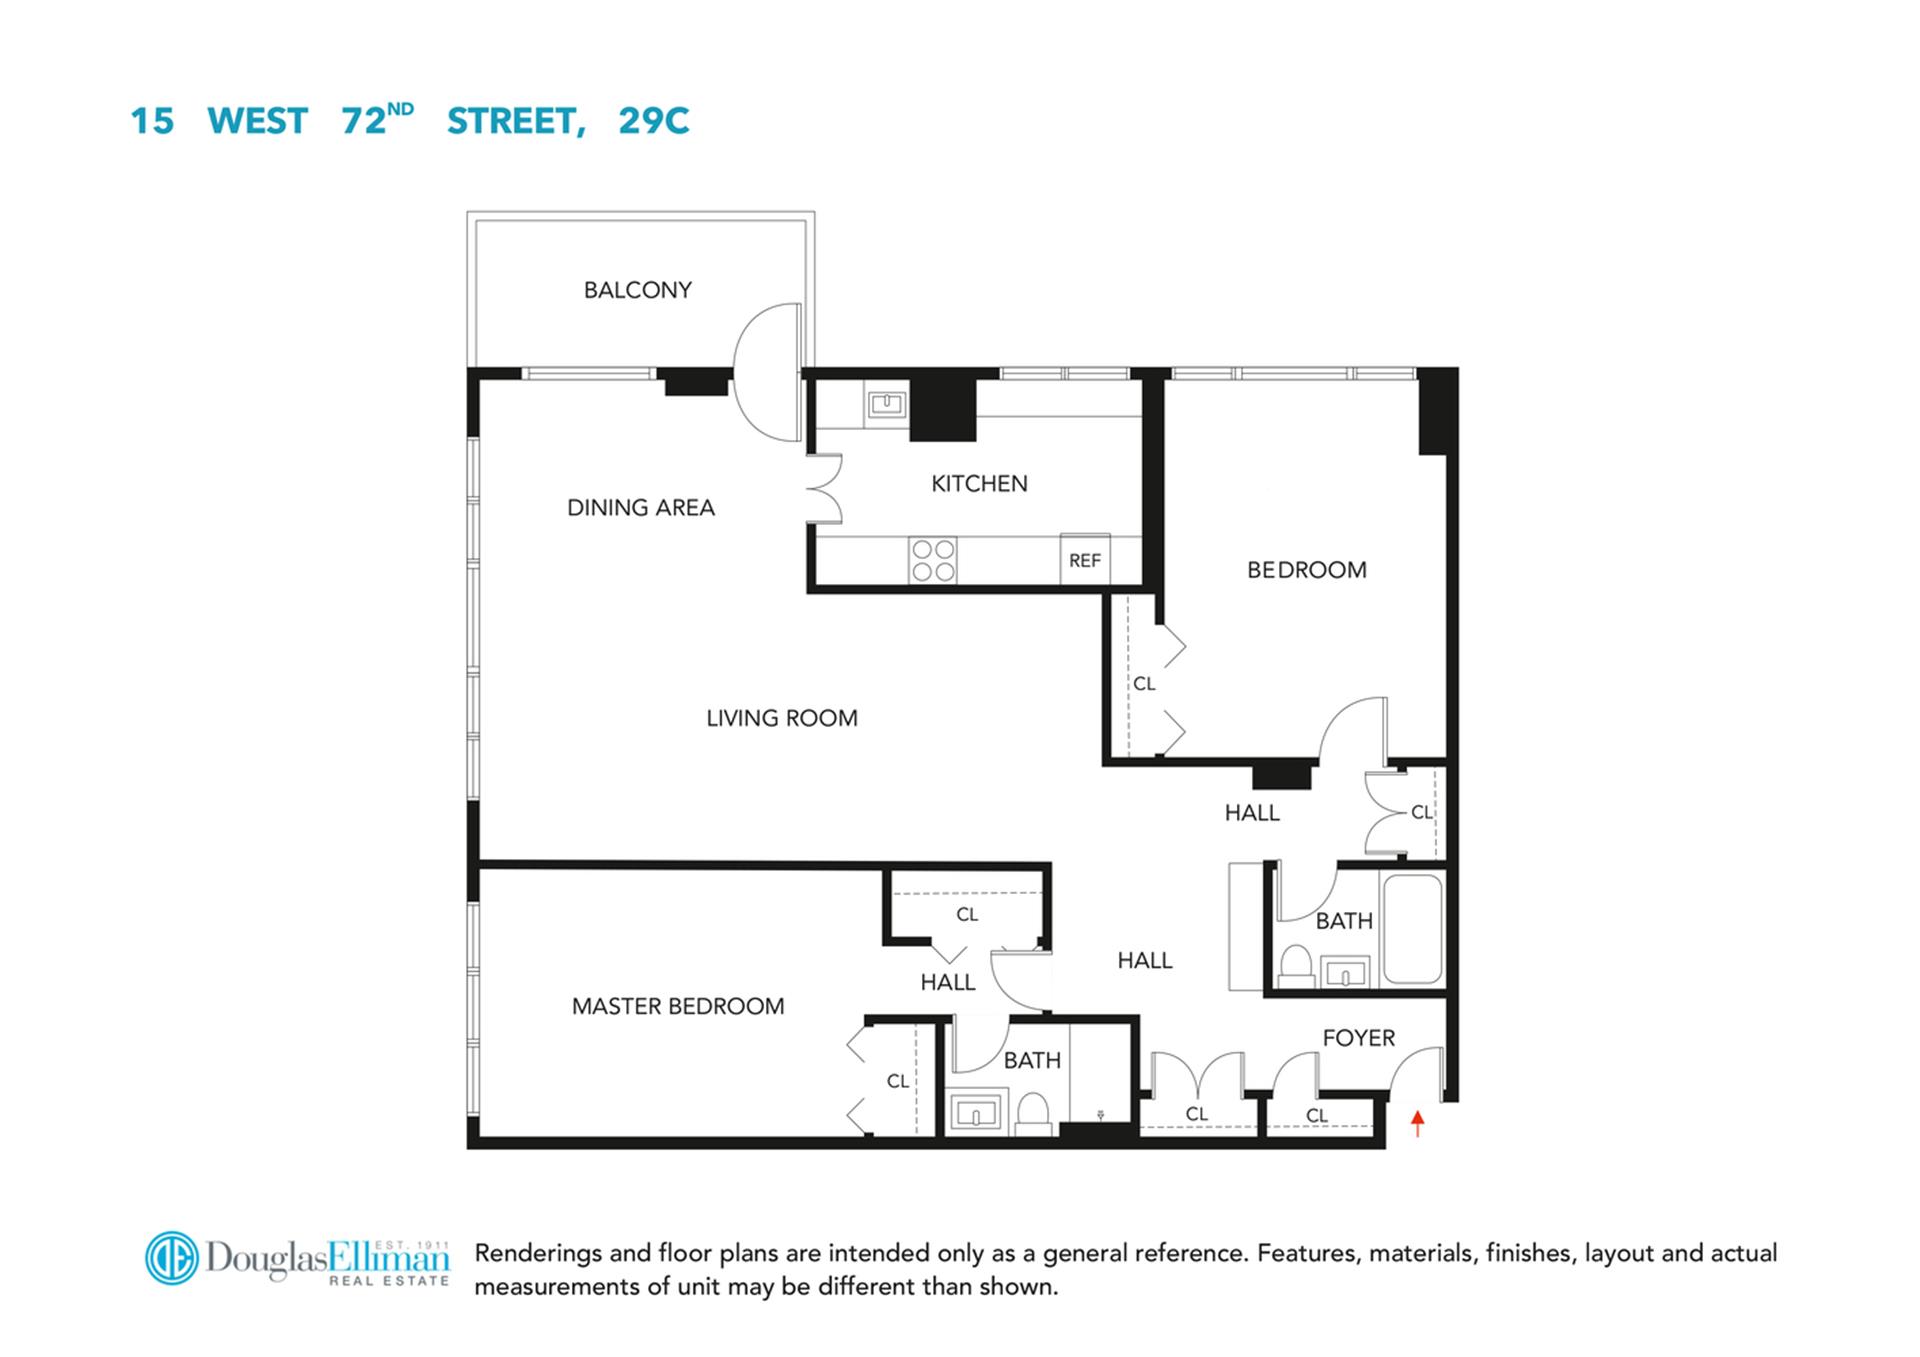 Floorplan for 15 West 72nd Street, 29C